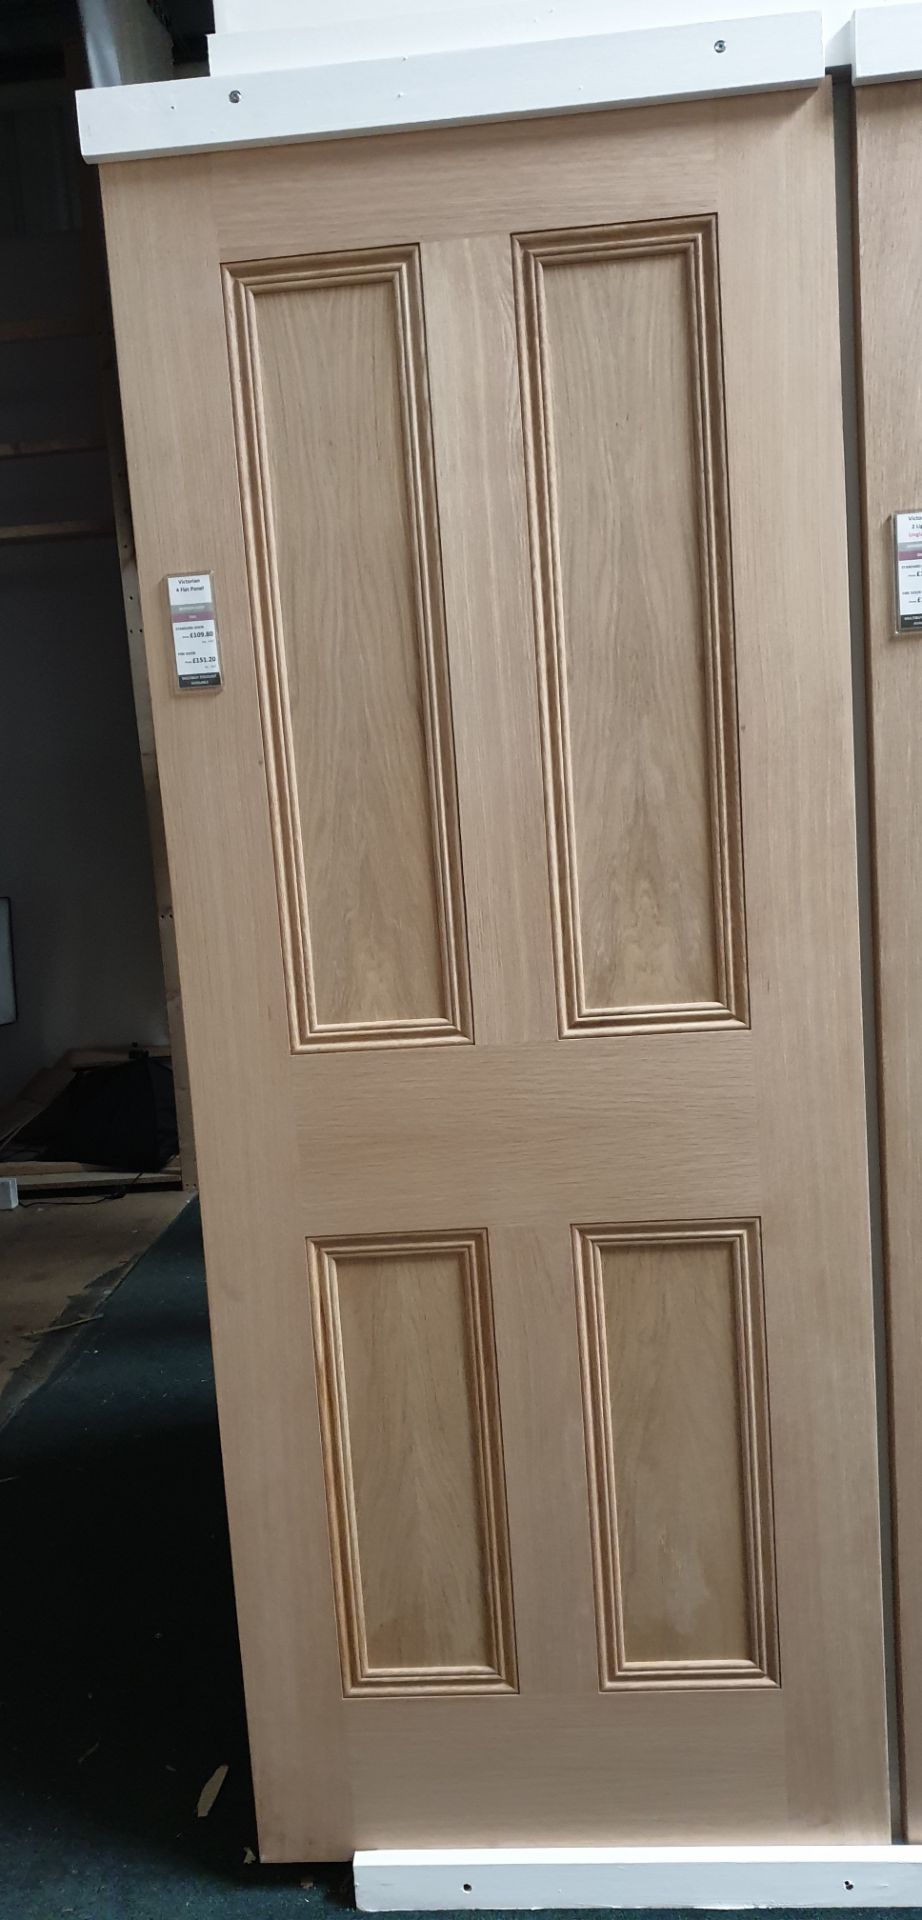 11x Victorian flat Panel AWOFP4P53 Internal Door, 78” x 33” x 35mm